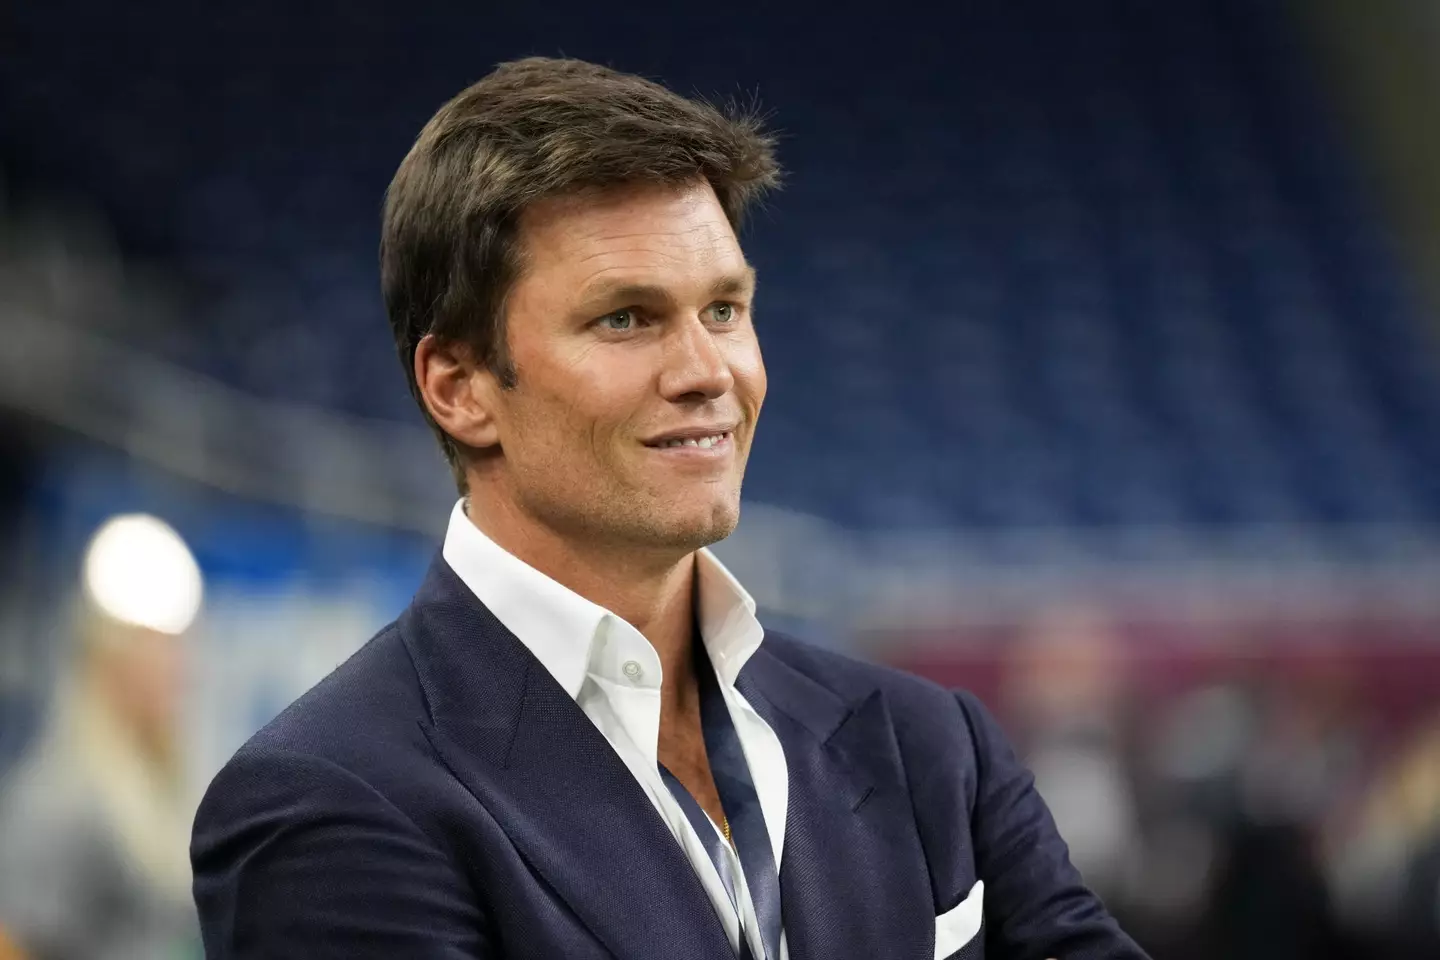 Former NFL star Tom Brady. (